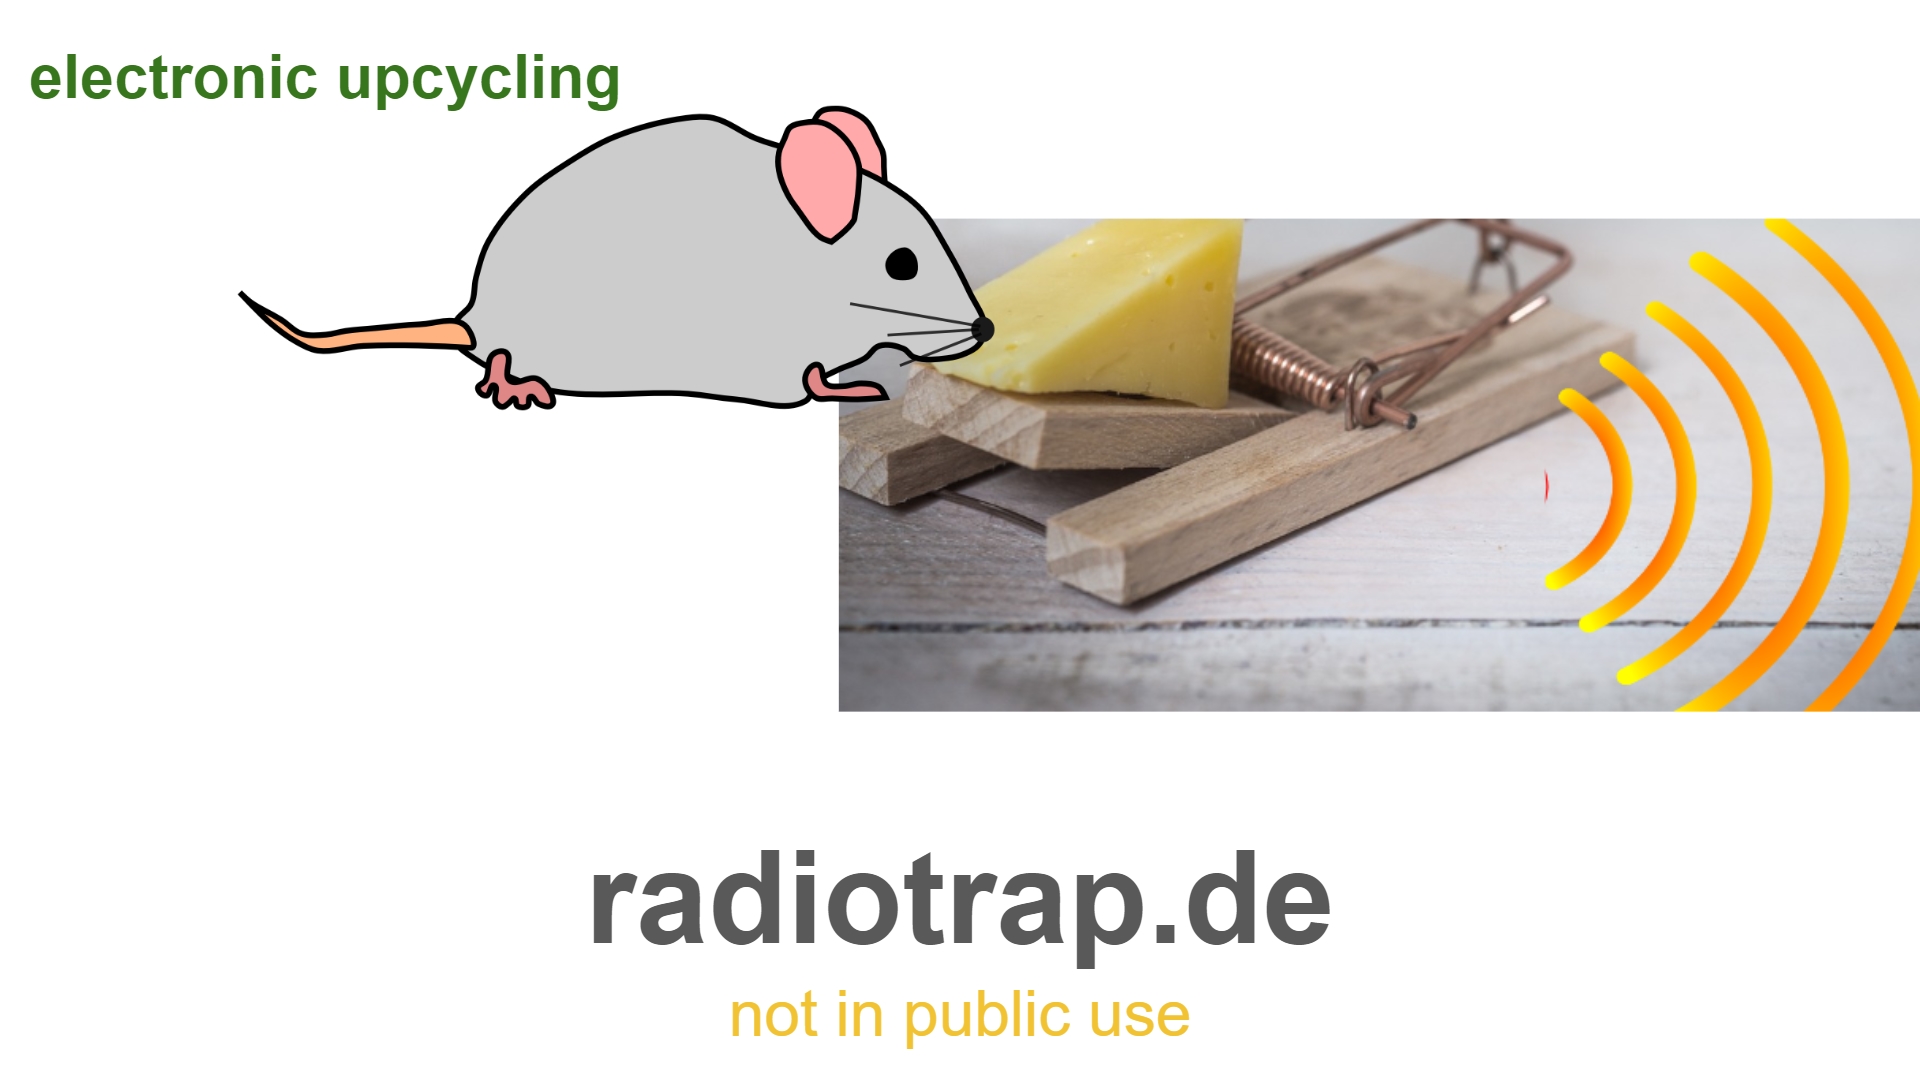 www.radiotrap.de